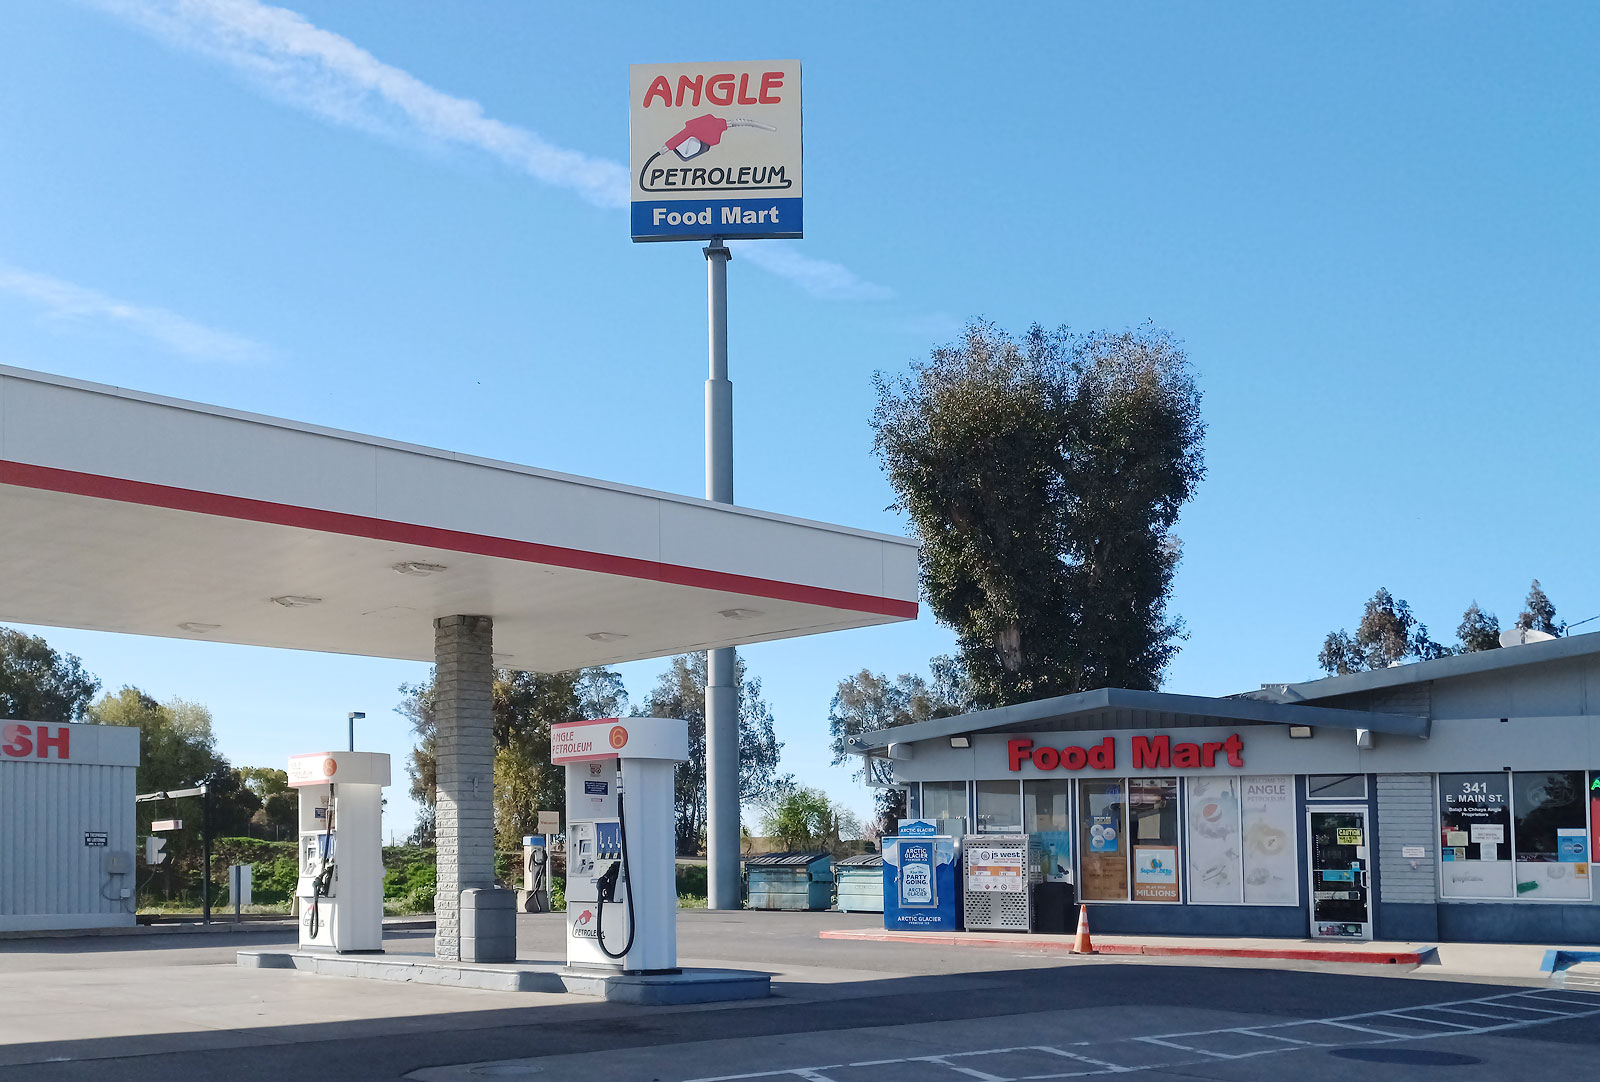 Angle Petroleum